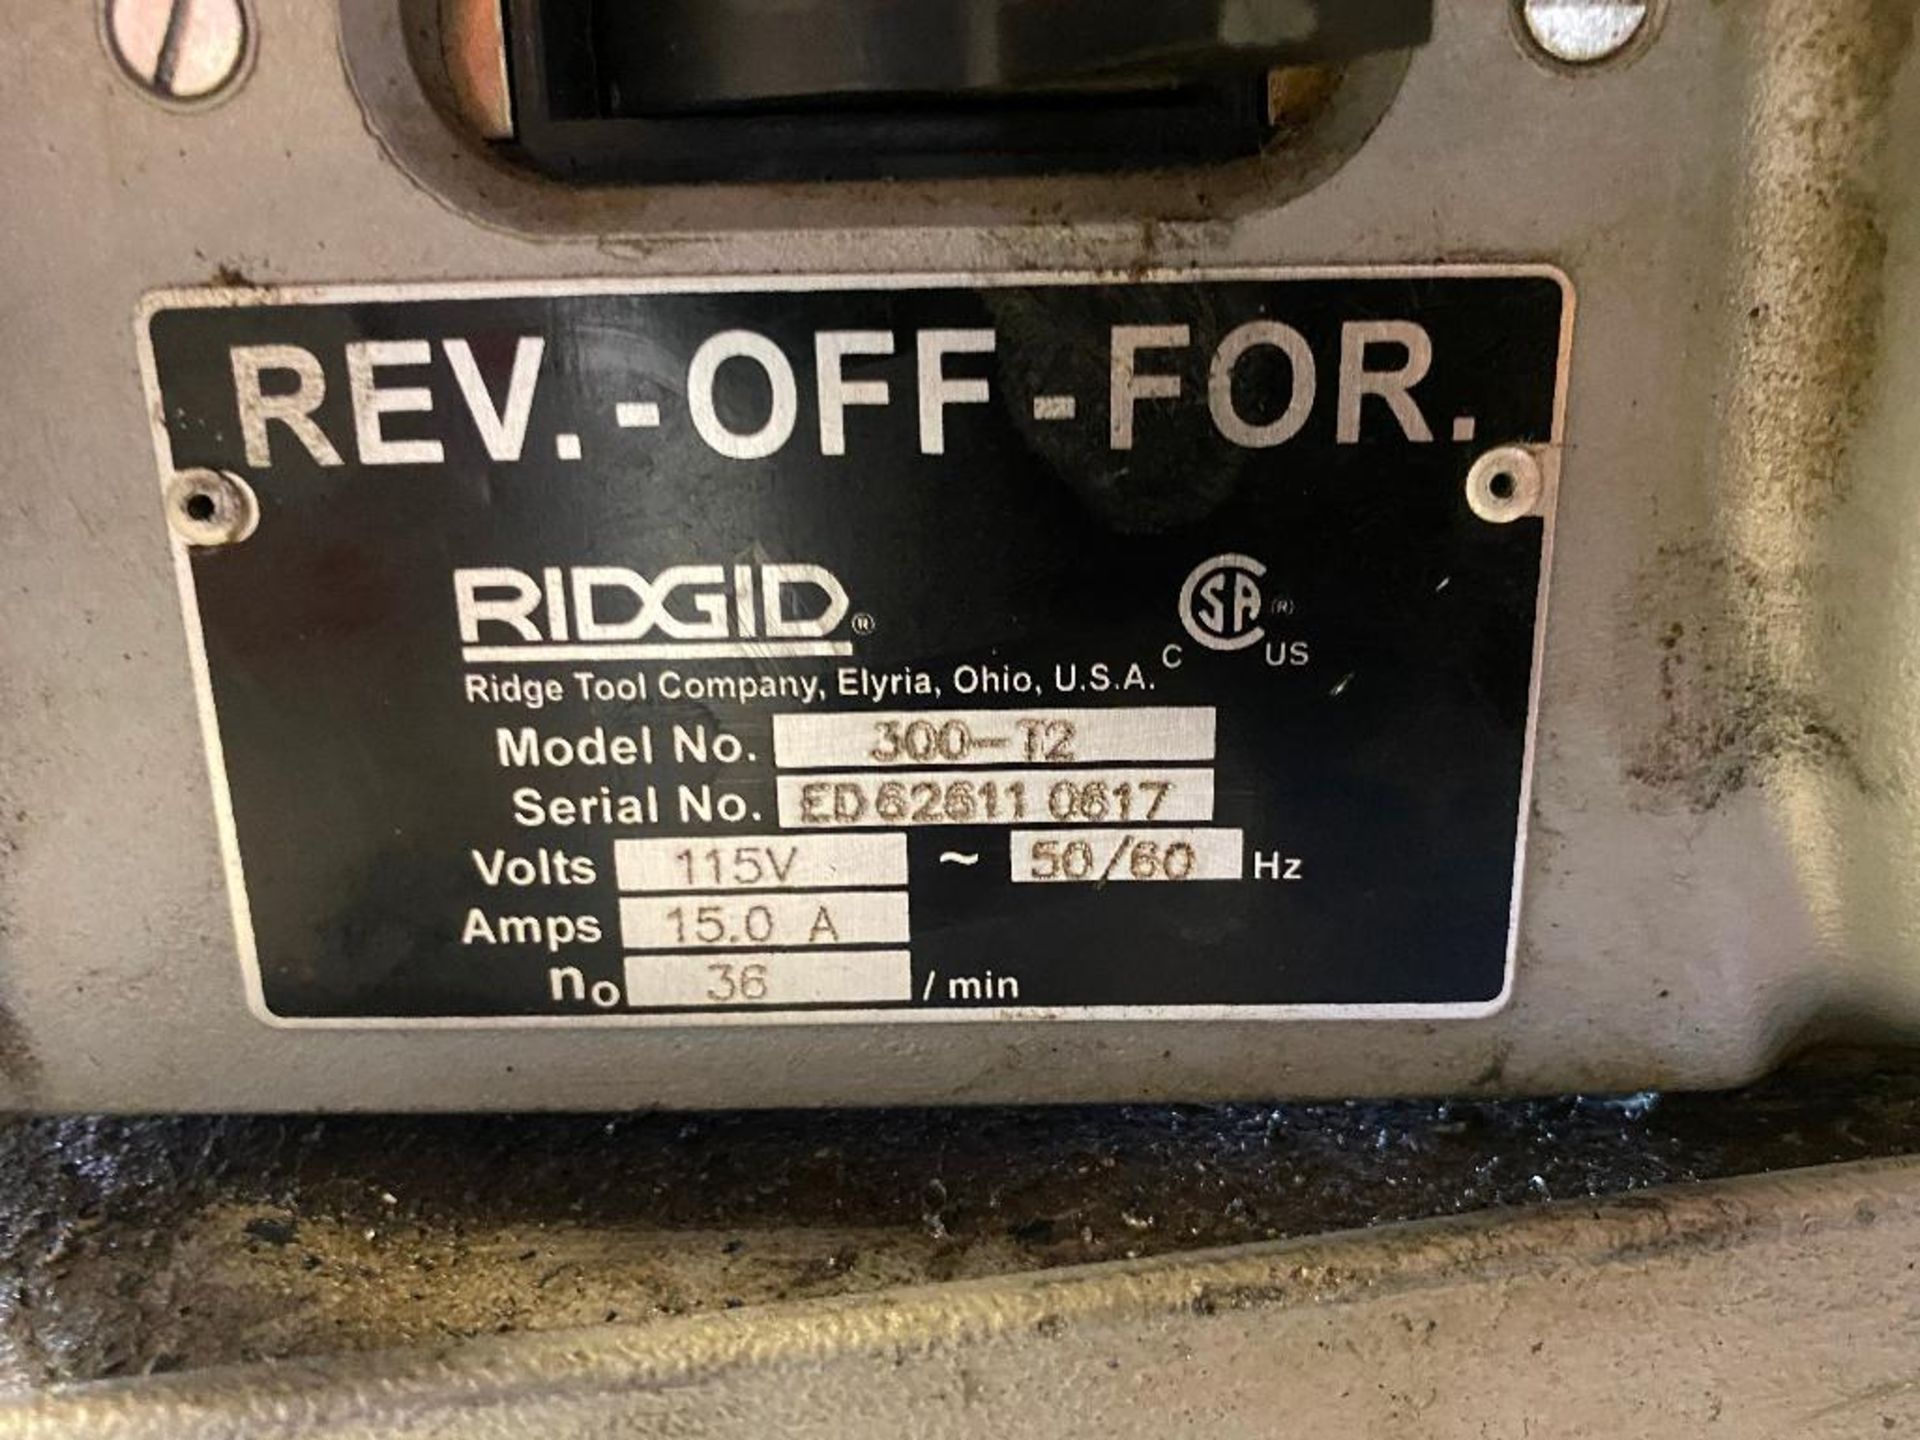 Ridgid 300-T2 Power Drive Pipe Threader - Image 6 of 6